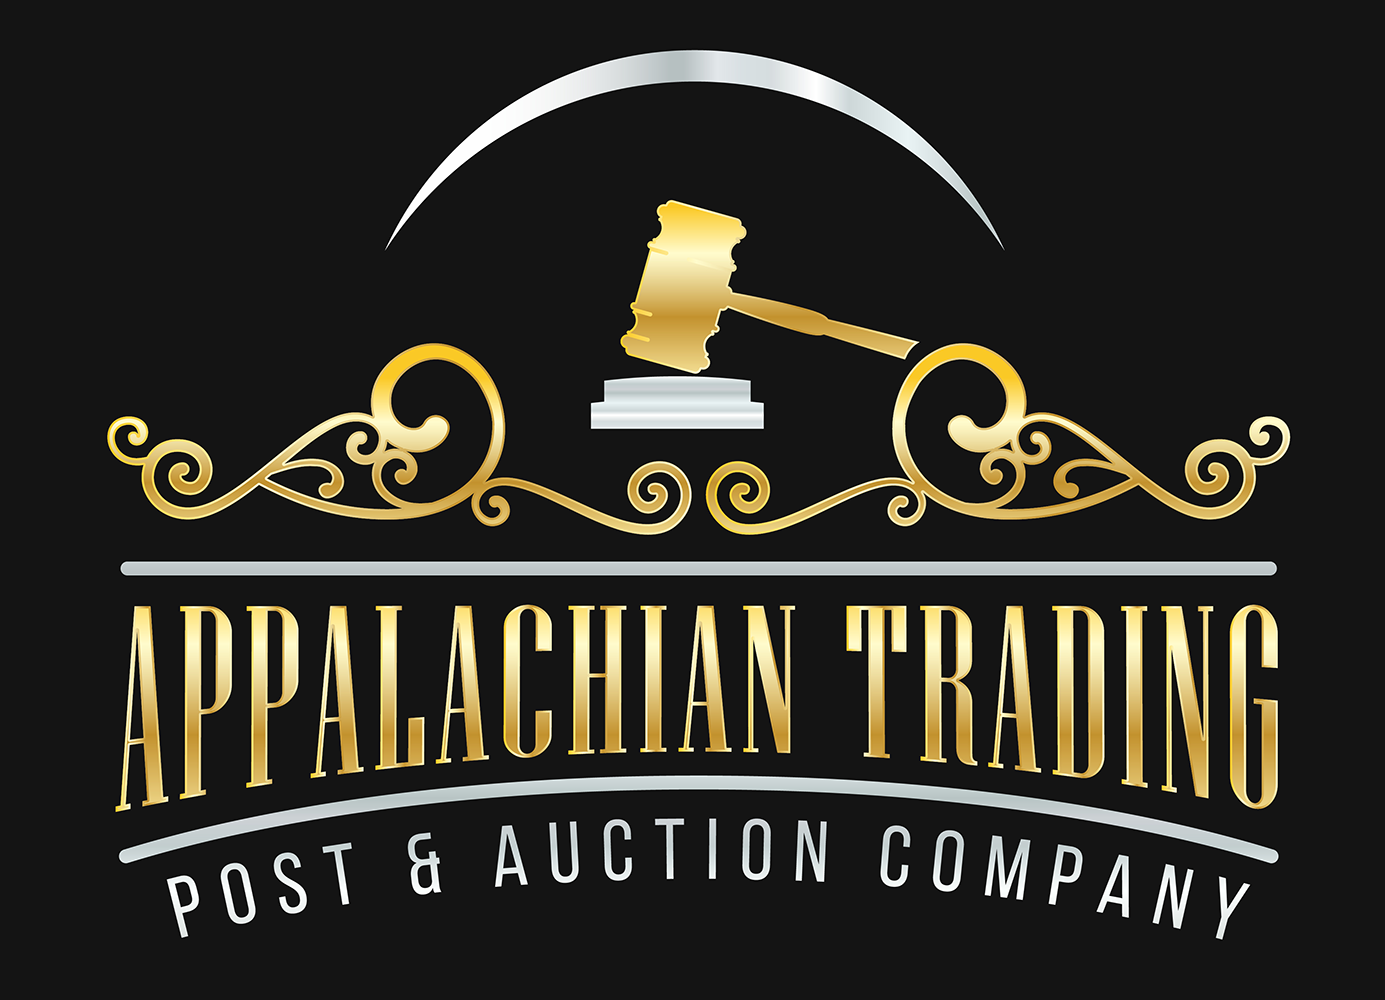 Appalachian Trading Post & Auction